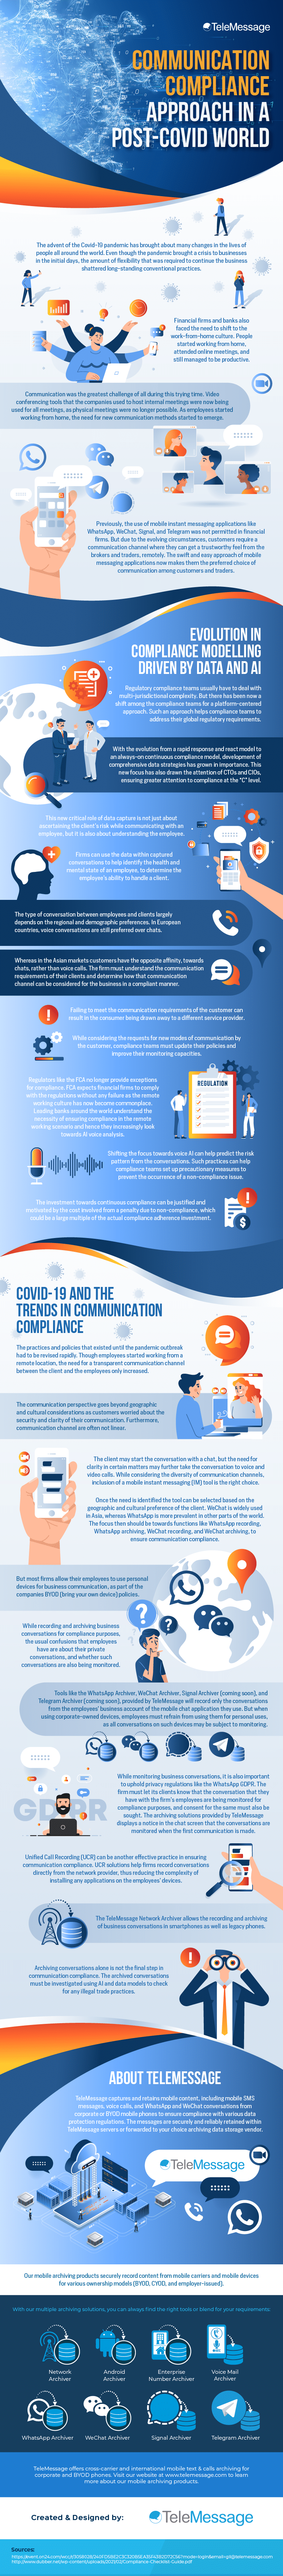 Communication Compliance